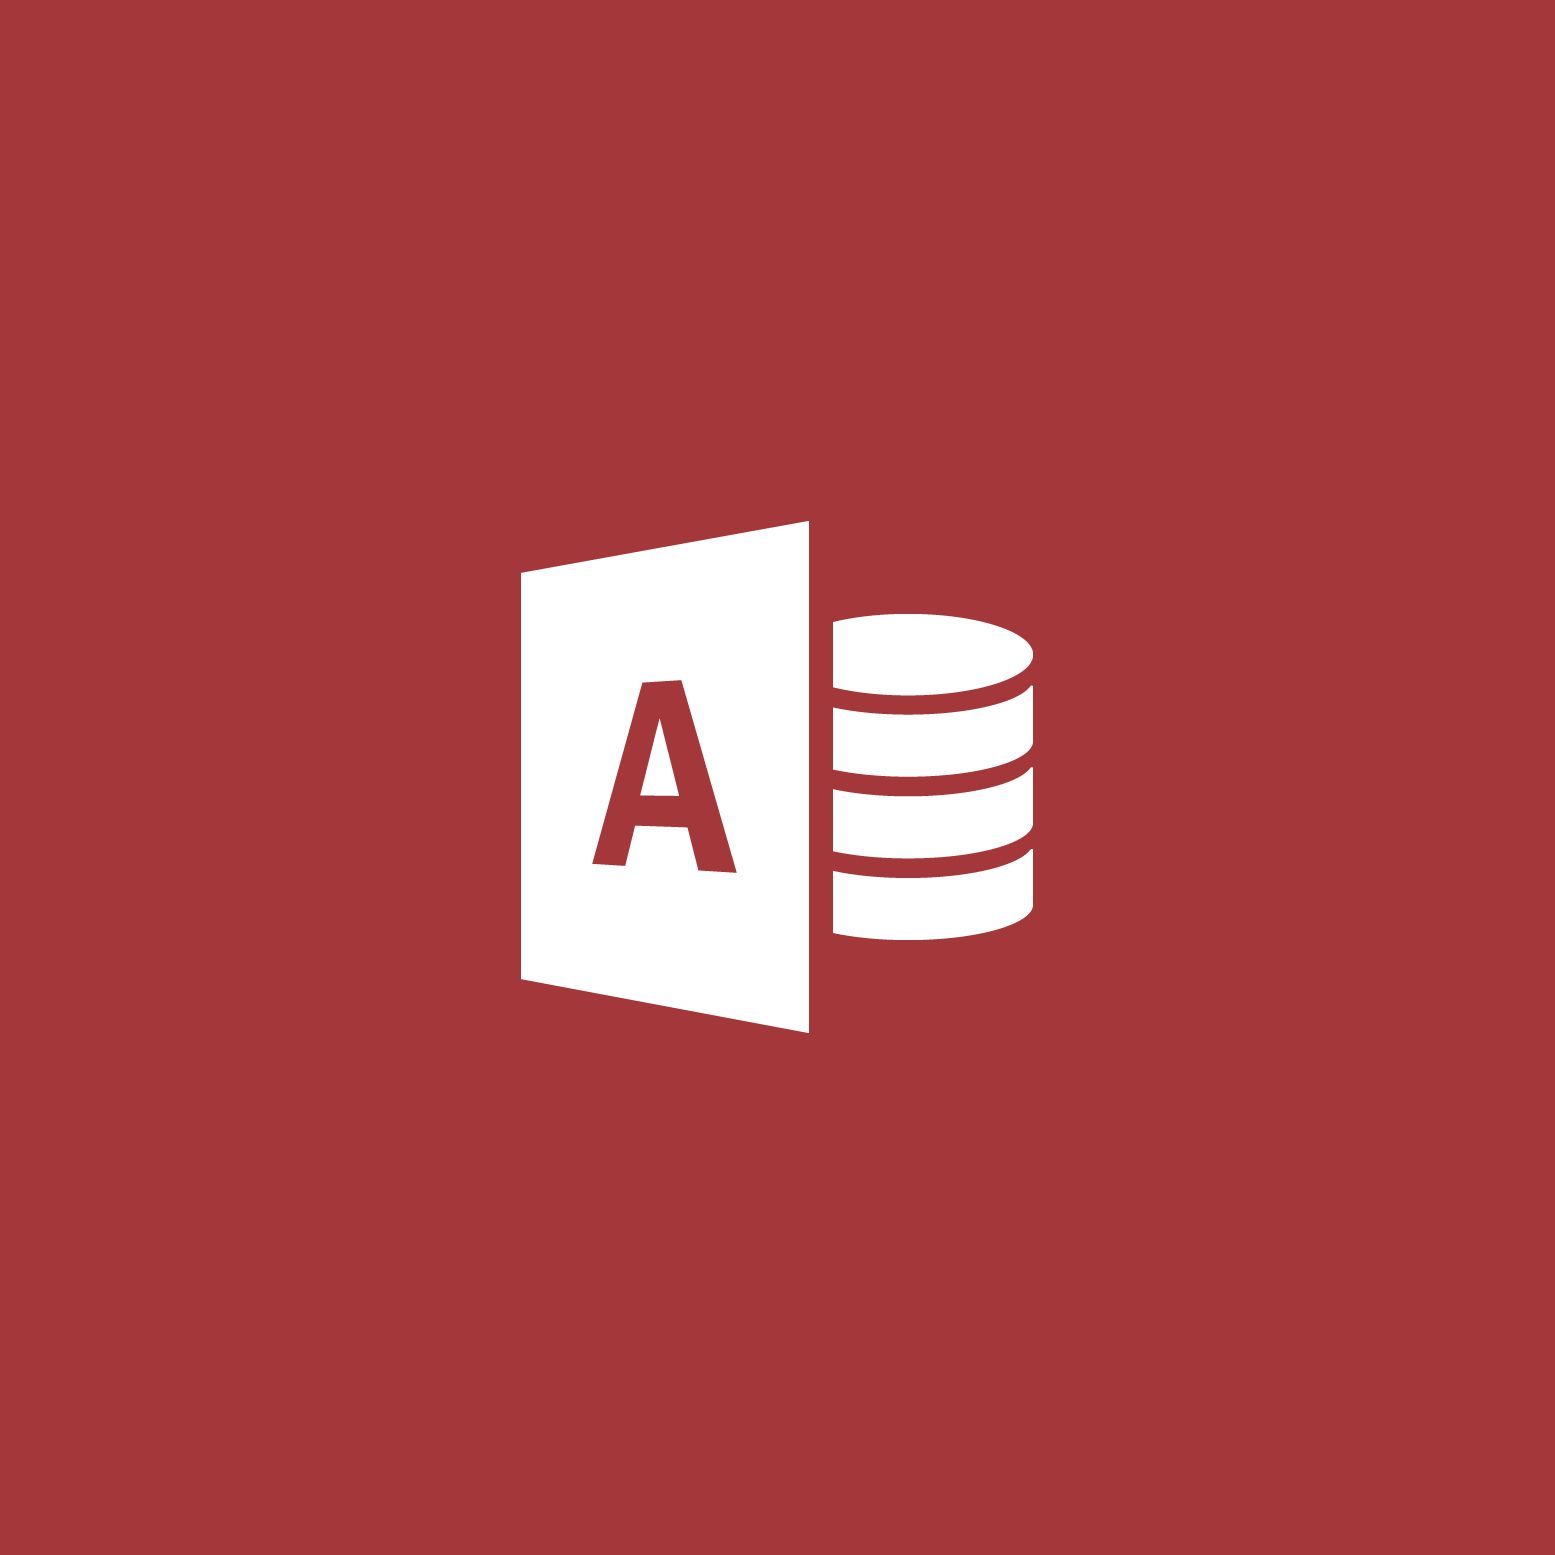 L access. База данных access значок. MS access ярлык. Access 2010 значок. Microsoft access логотип.